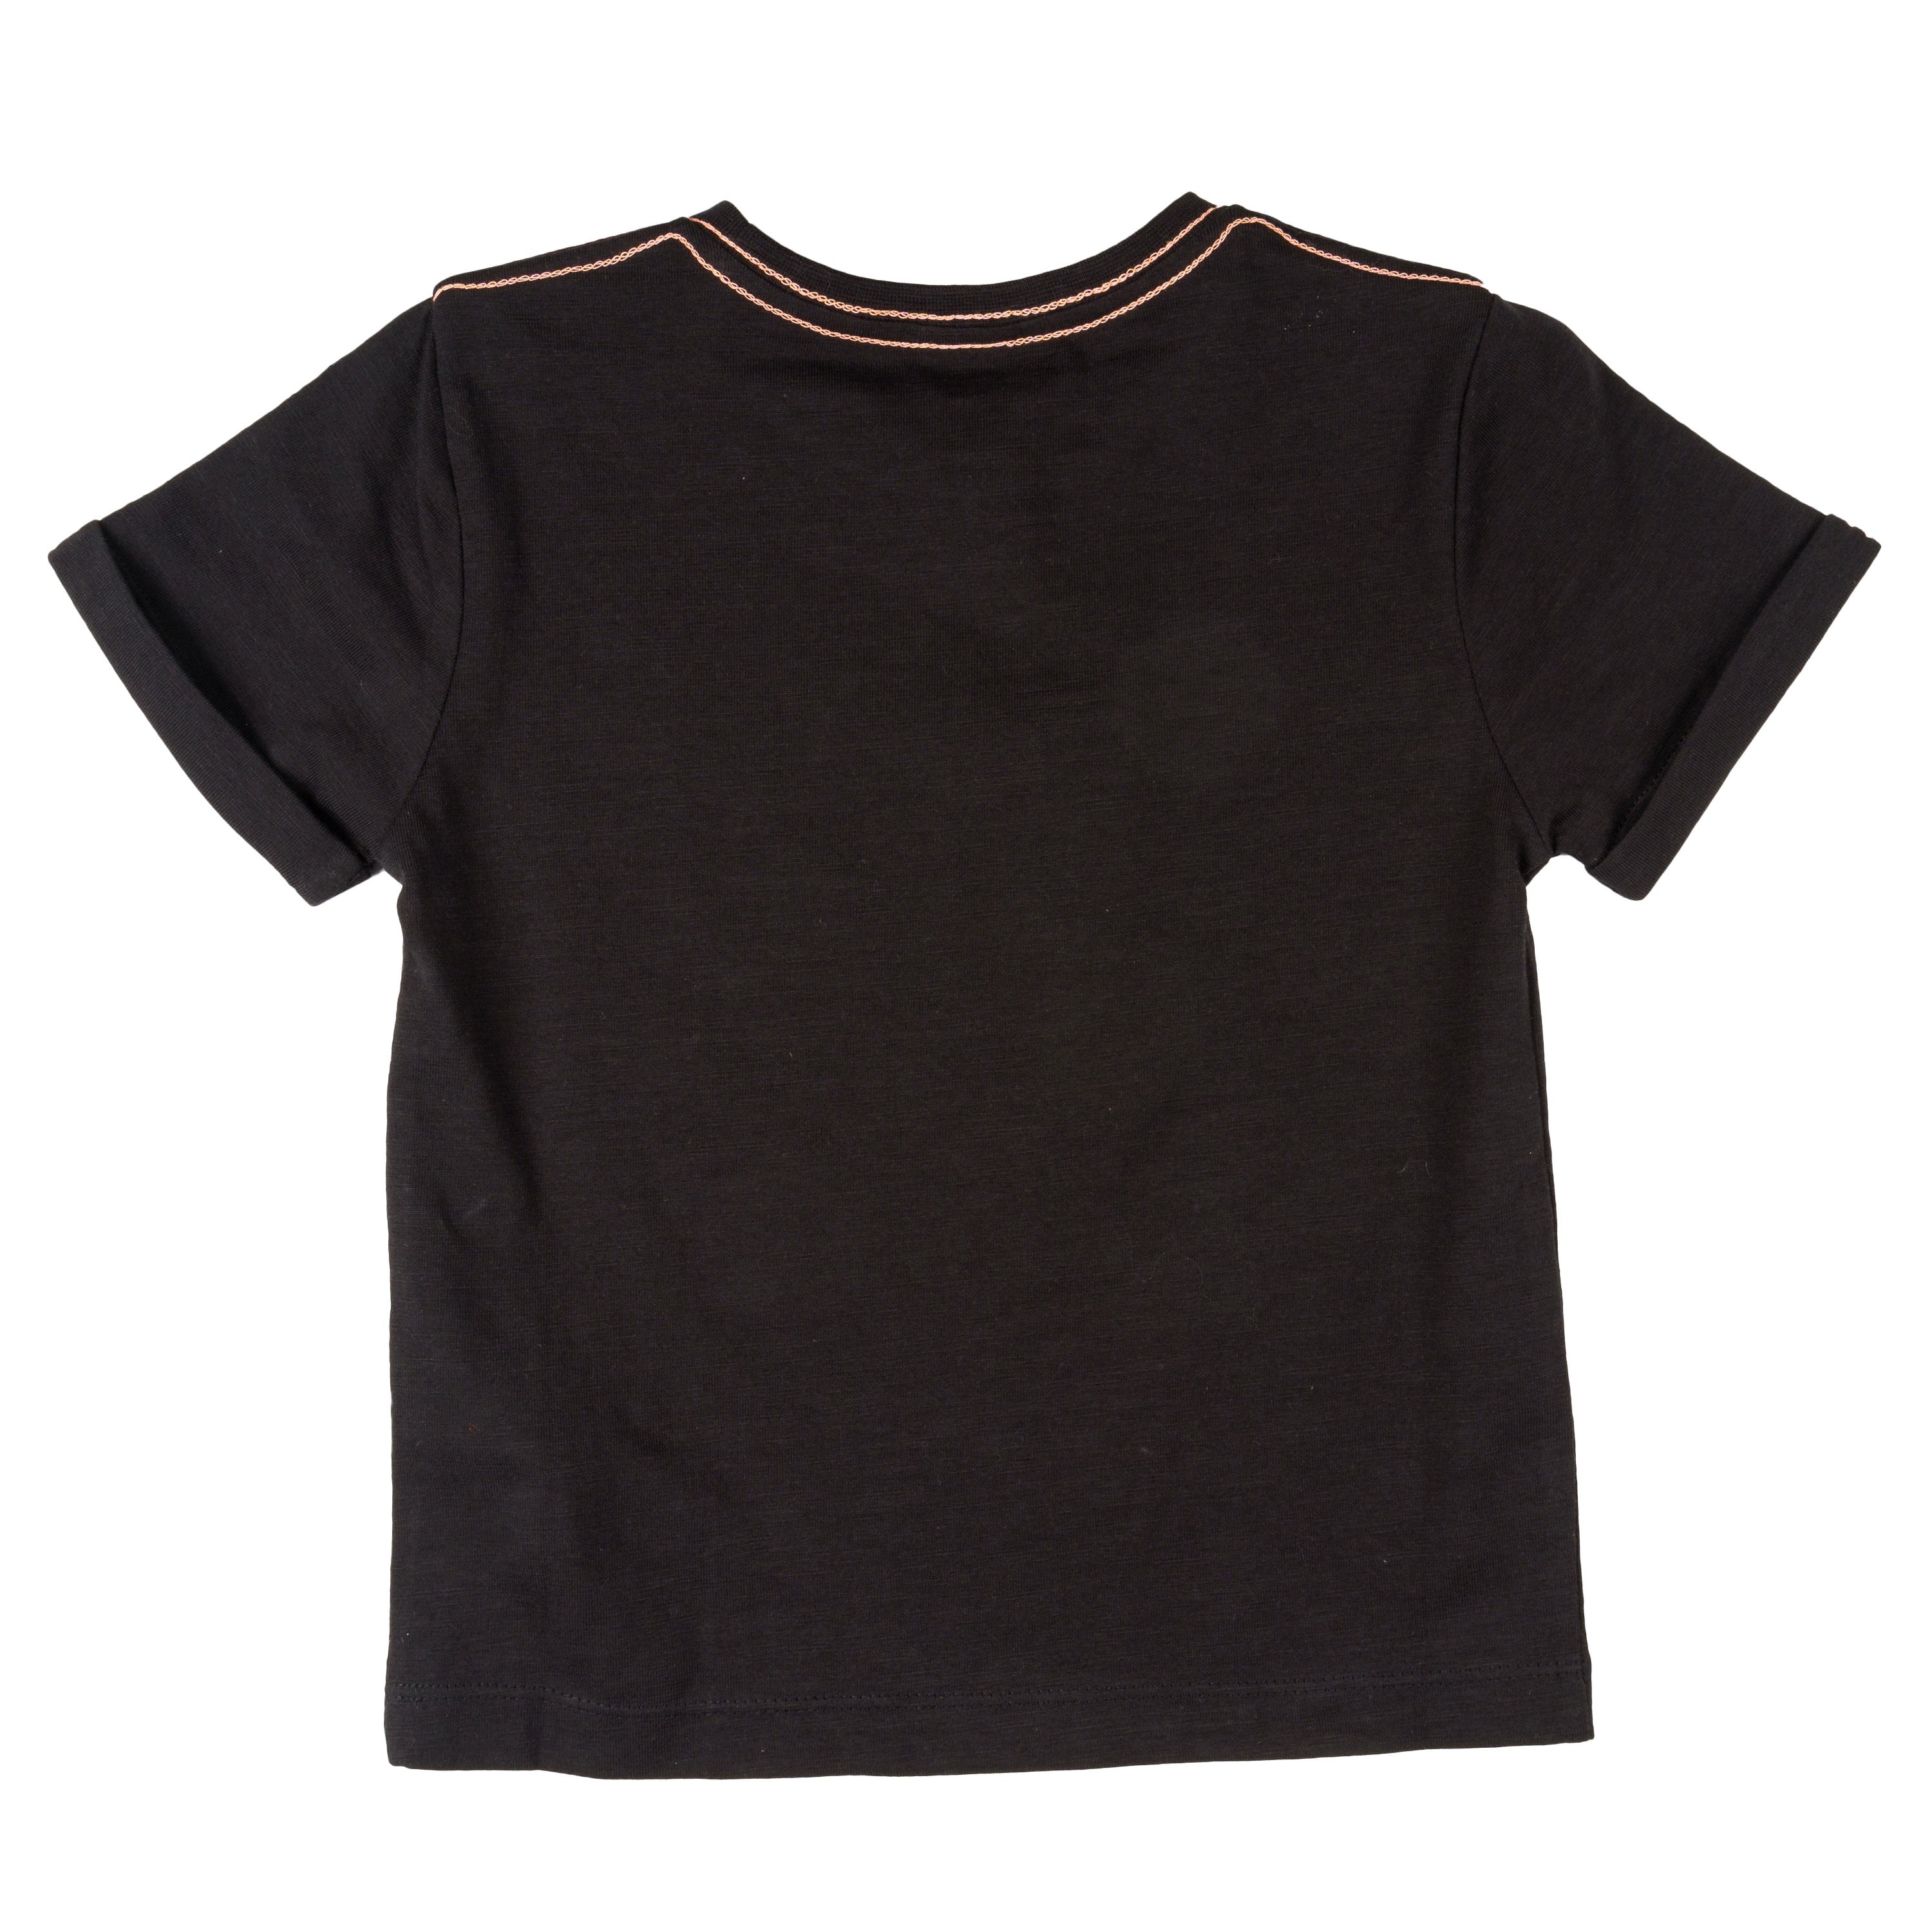 Camiseta de niño color negro VERANO/Outlet